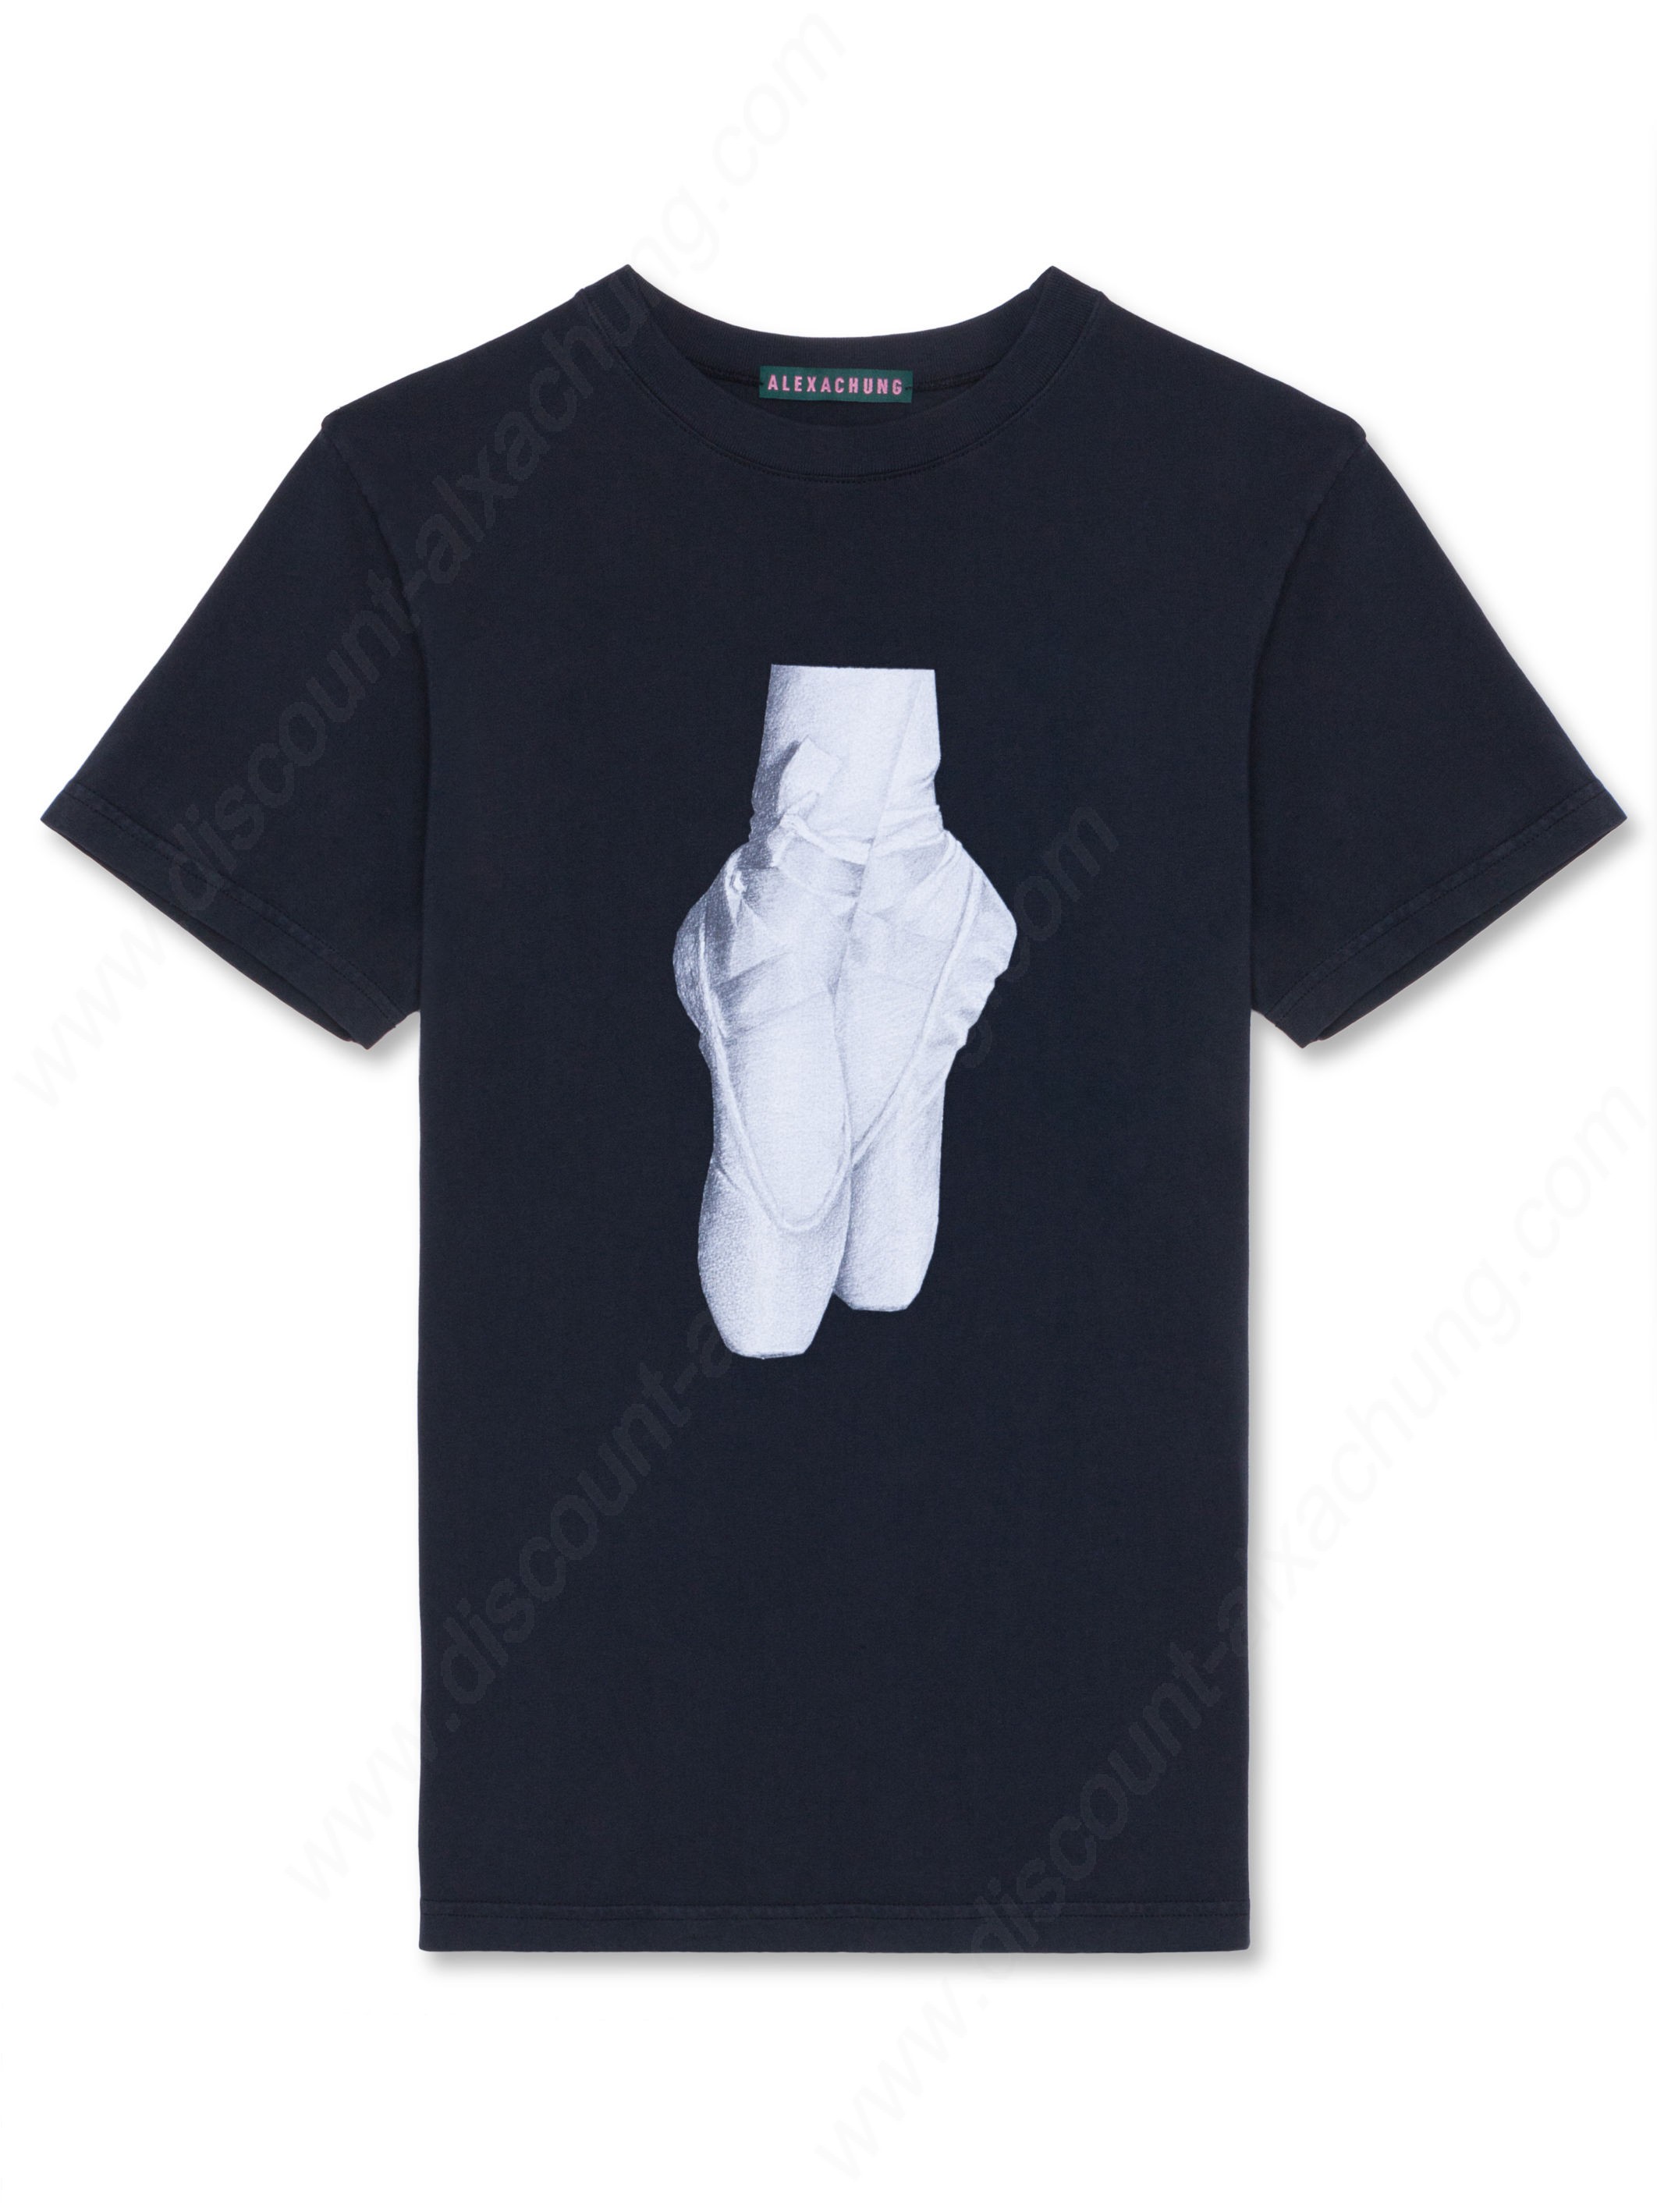 Alexachung Washed Black En Pointe T-Shirts - Alexachung Washed Black En Pointe T-Shirts